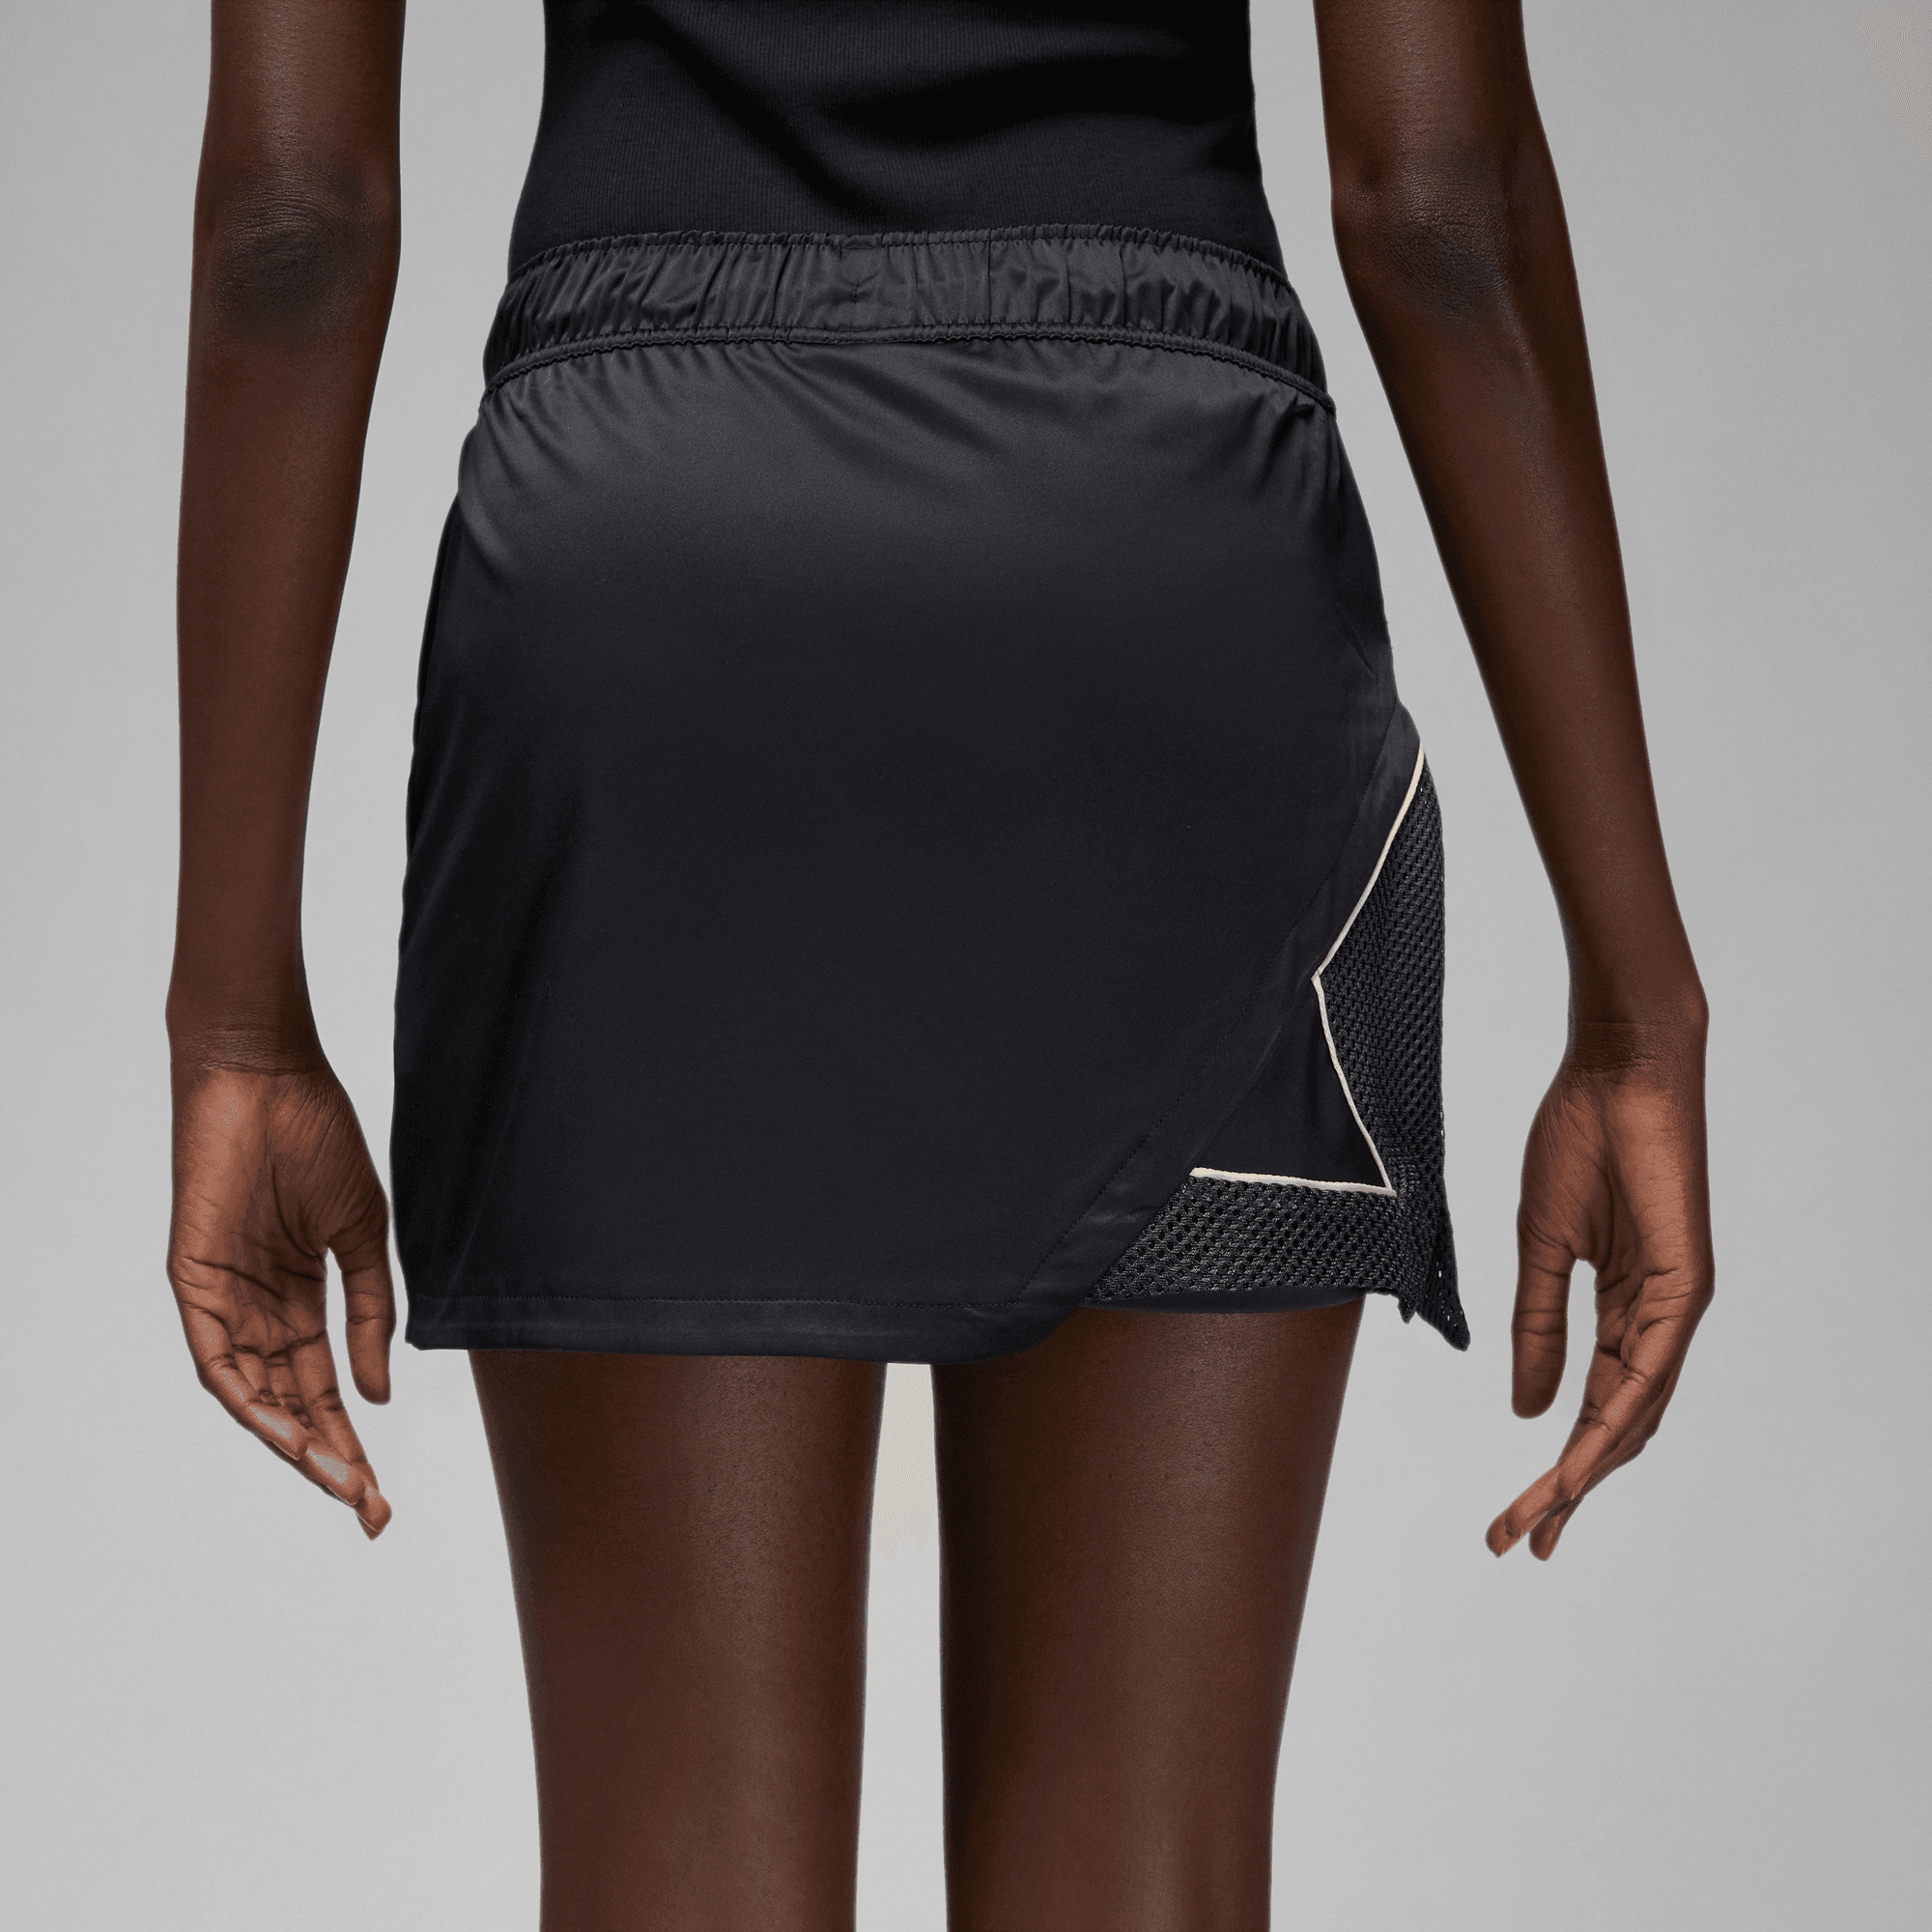 Essentials Diamond 2-in-1 Skirt - Black/Dark Smoke Grey/Sanddrift